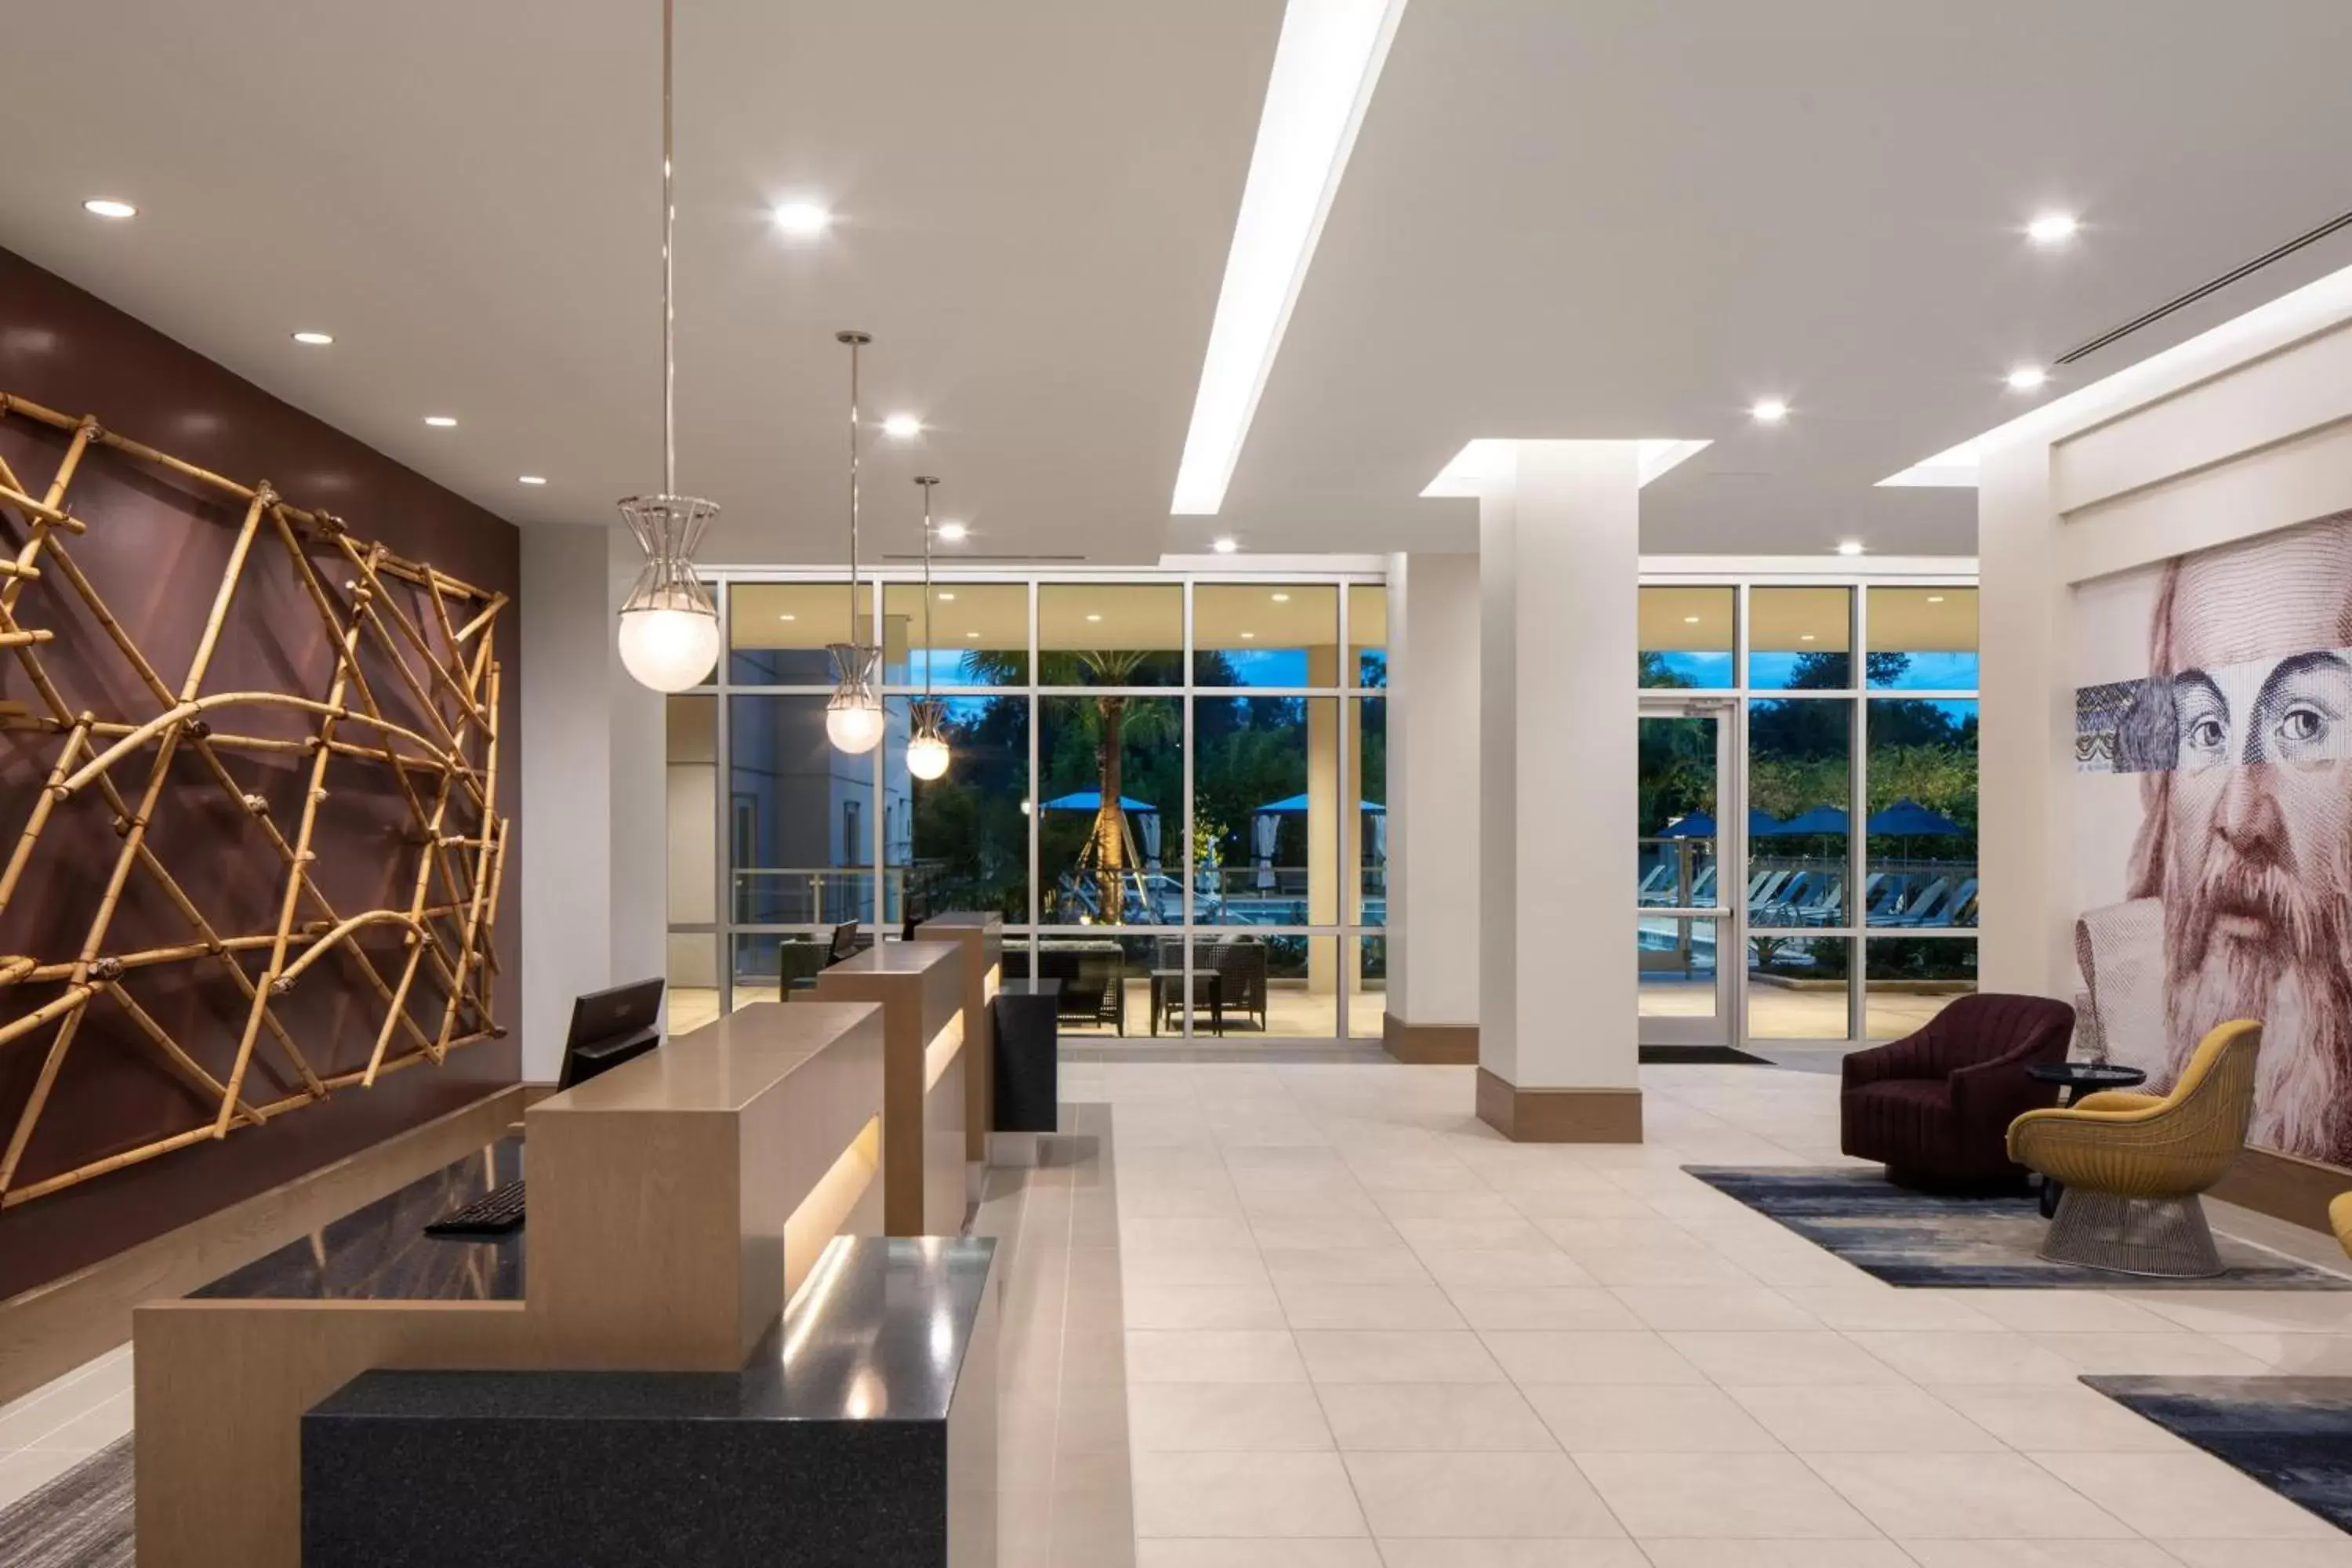 Lobby or reception in The Celeste Hotel, Orlando, a Tribute Portfolio Hotel